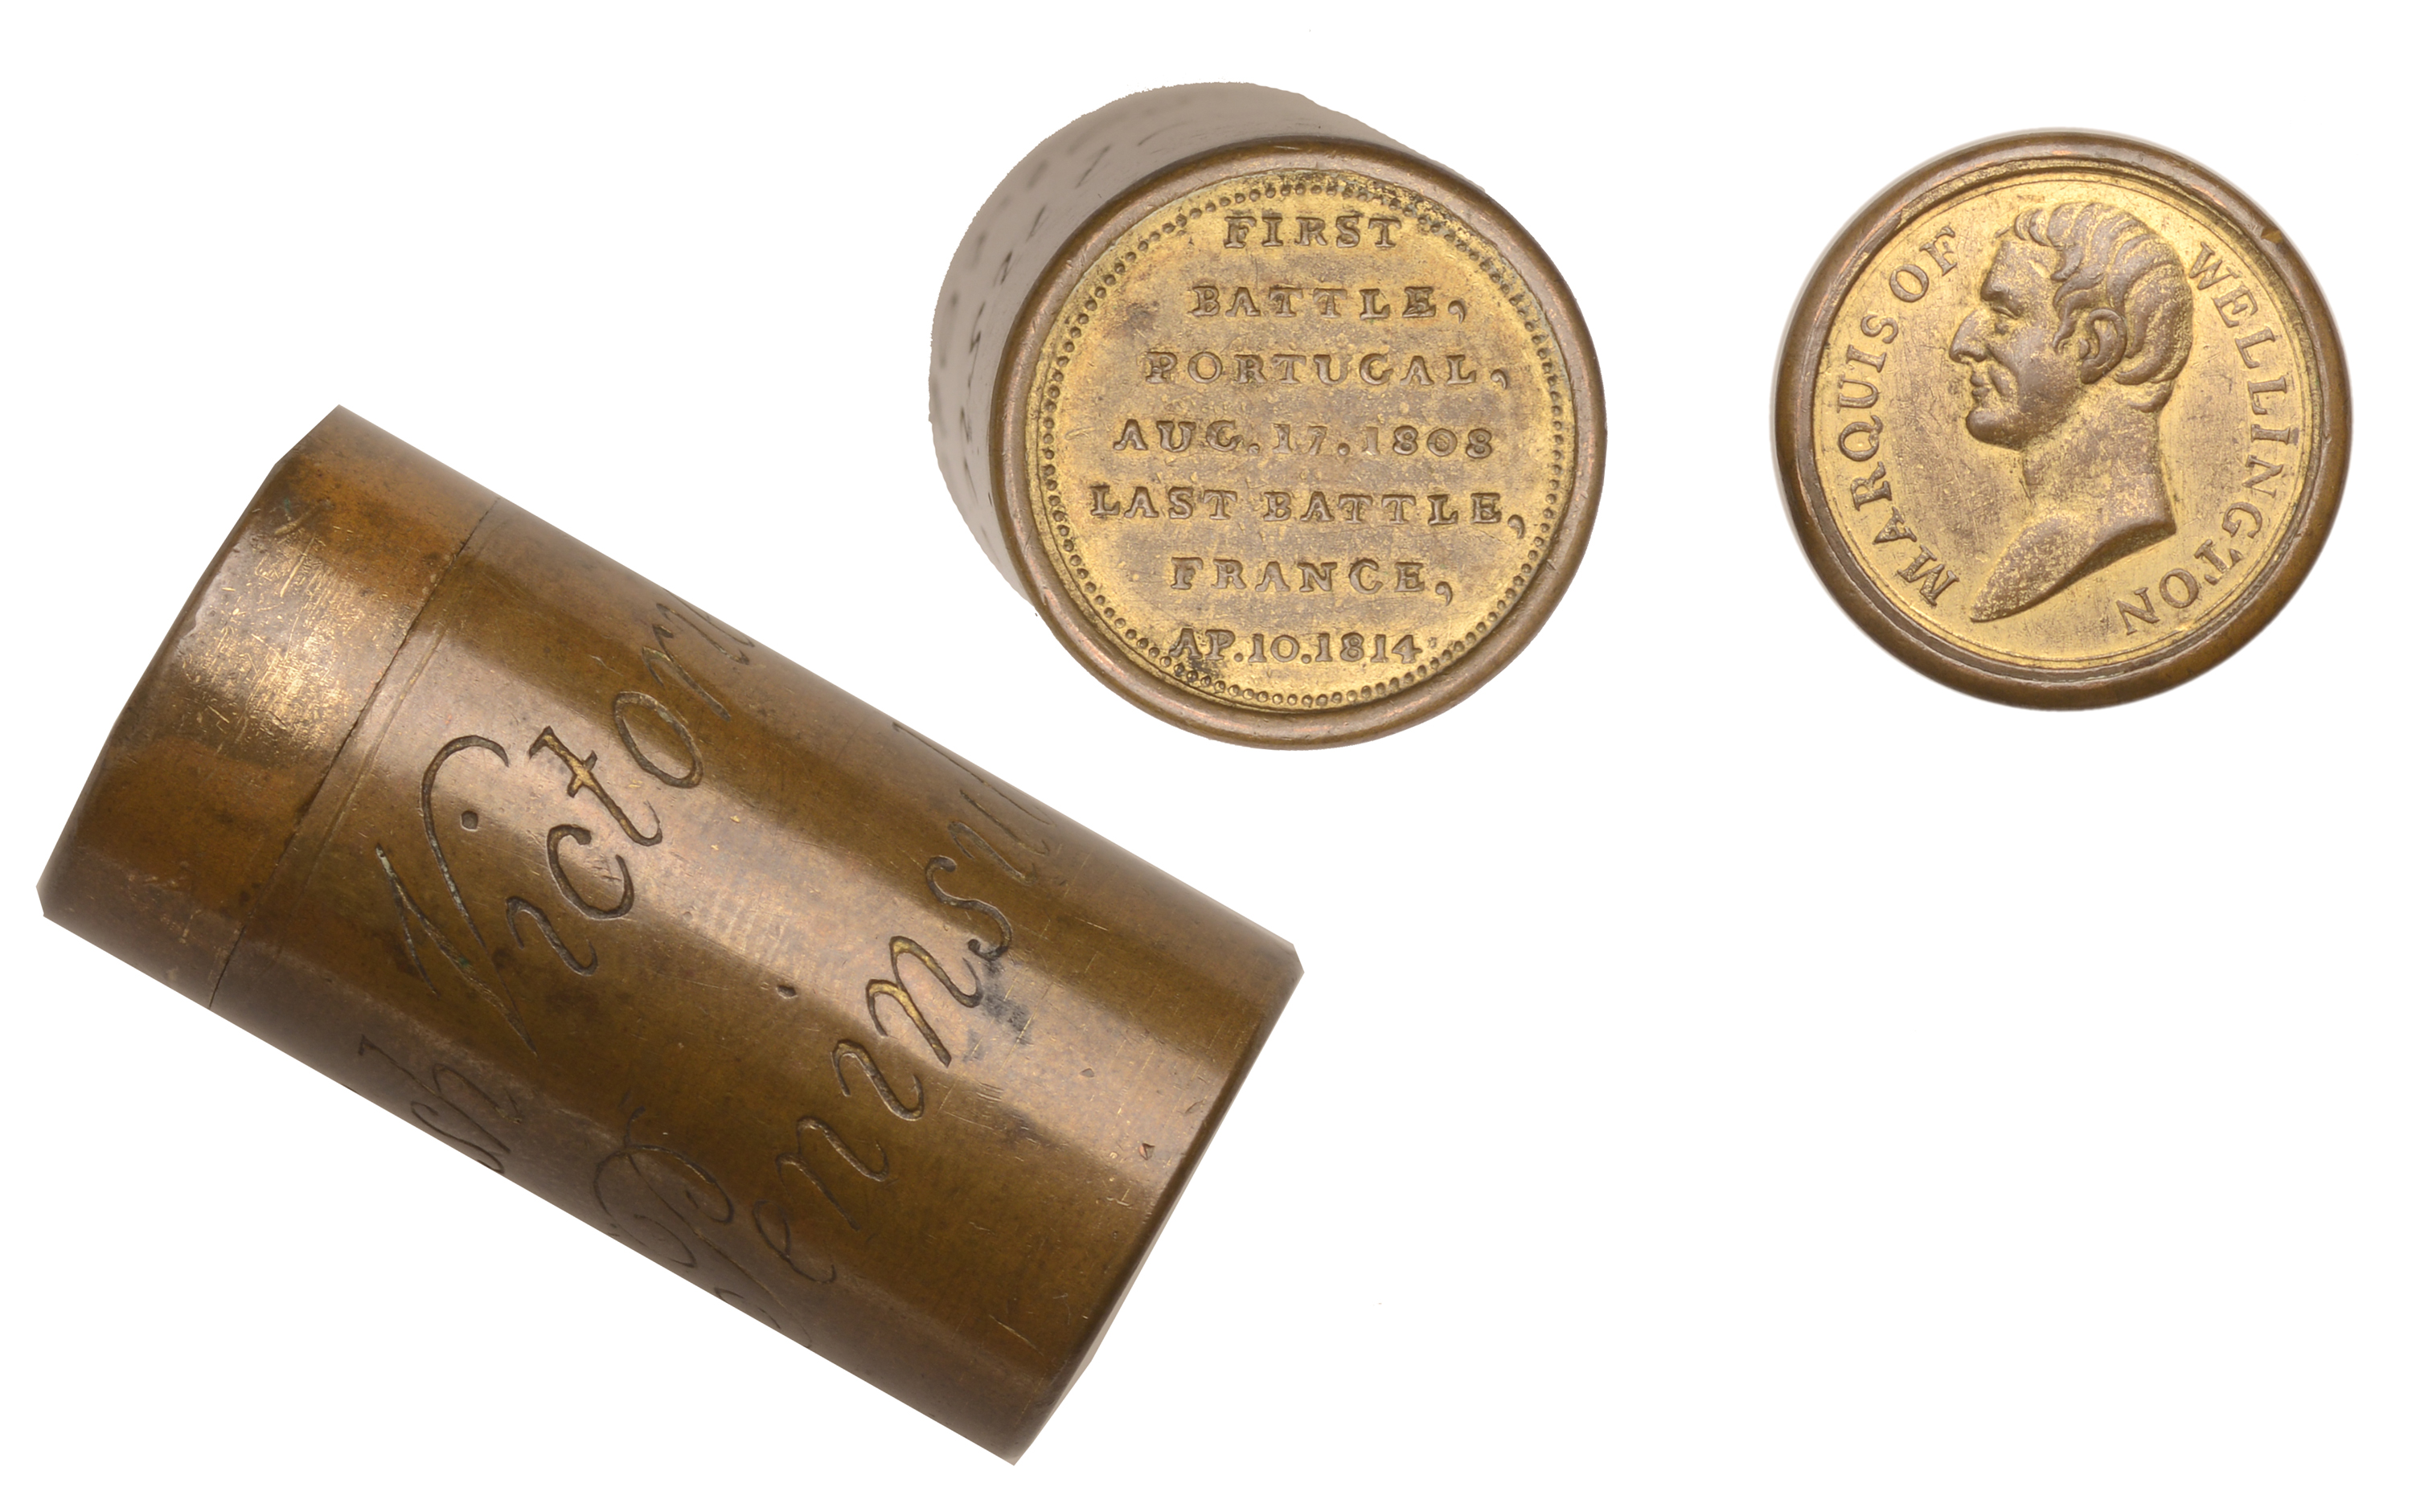 British Battles, 1815, a tubular brass box medal by E. Thomason inscribed 'British Victories... - Image 2 of 2